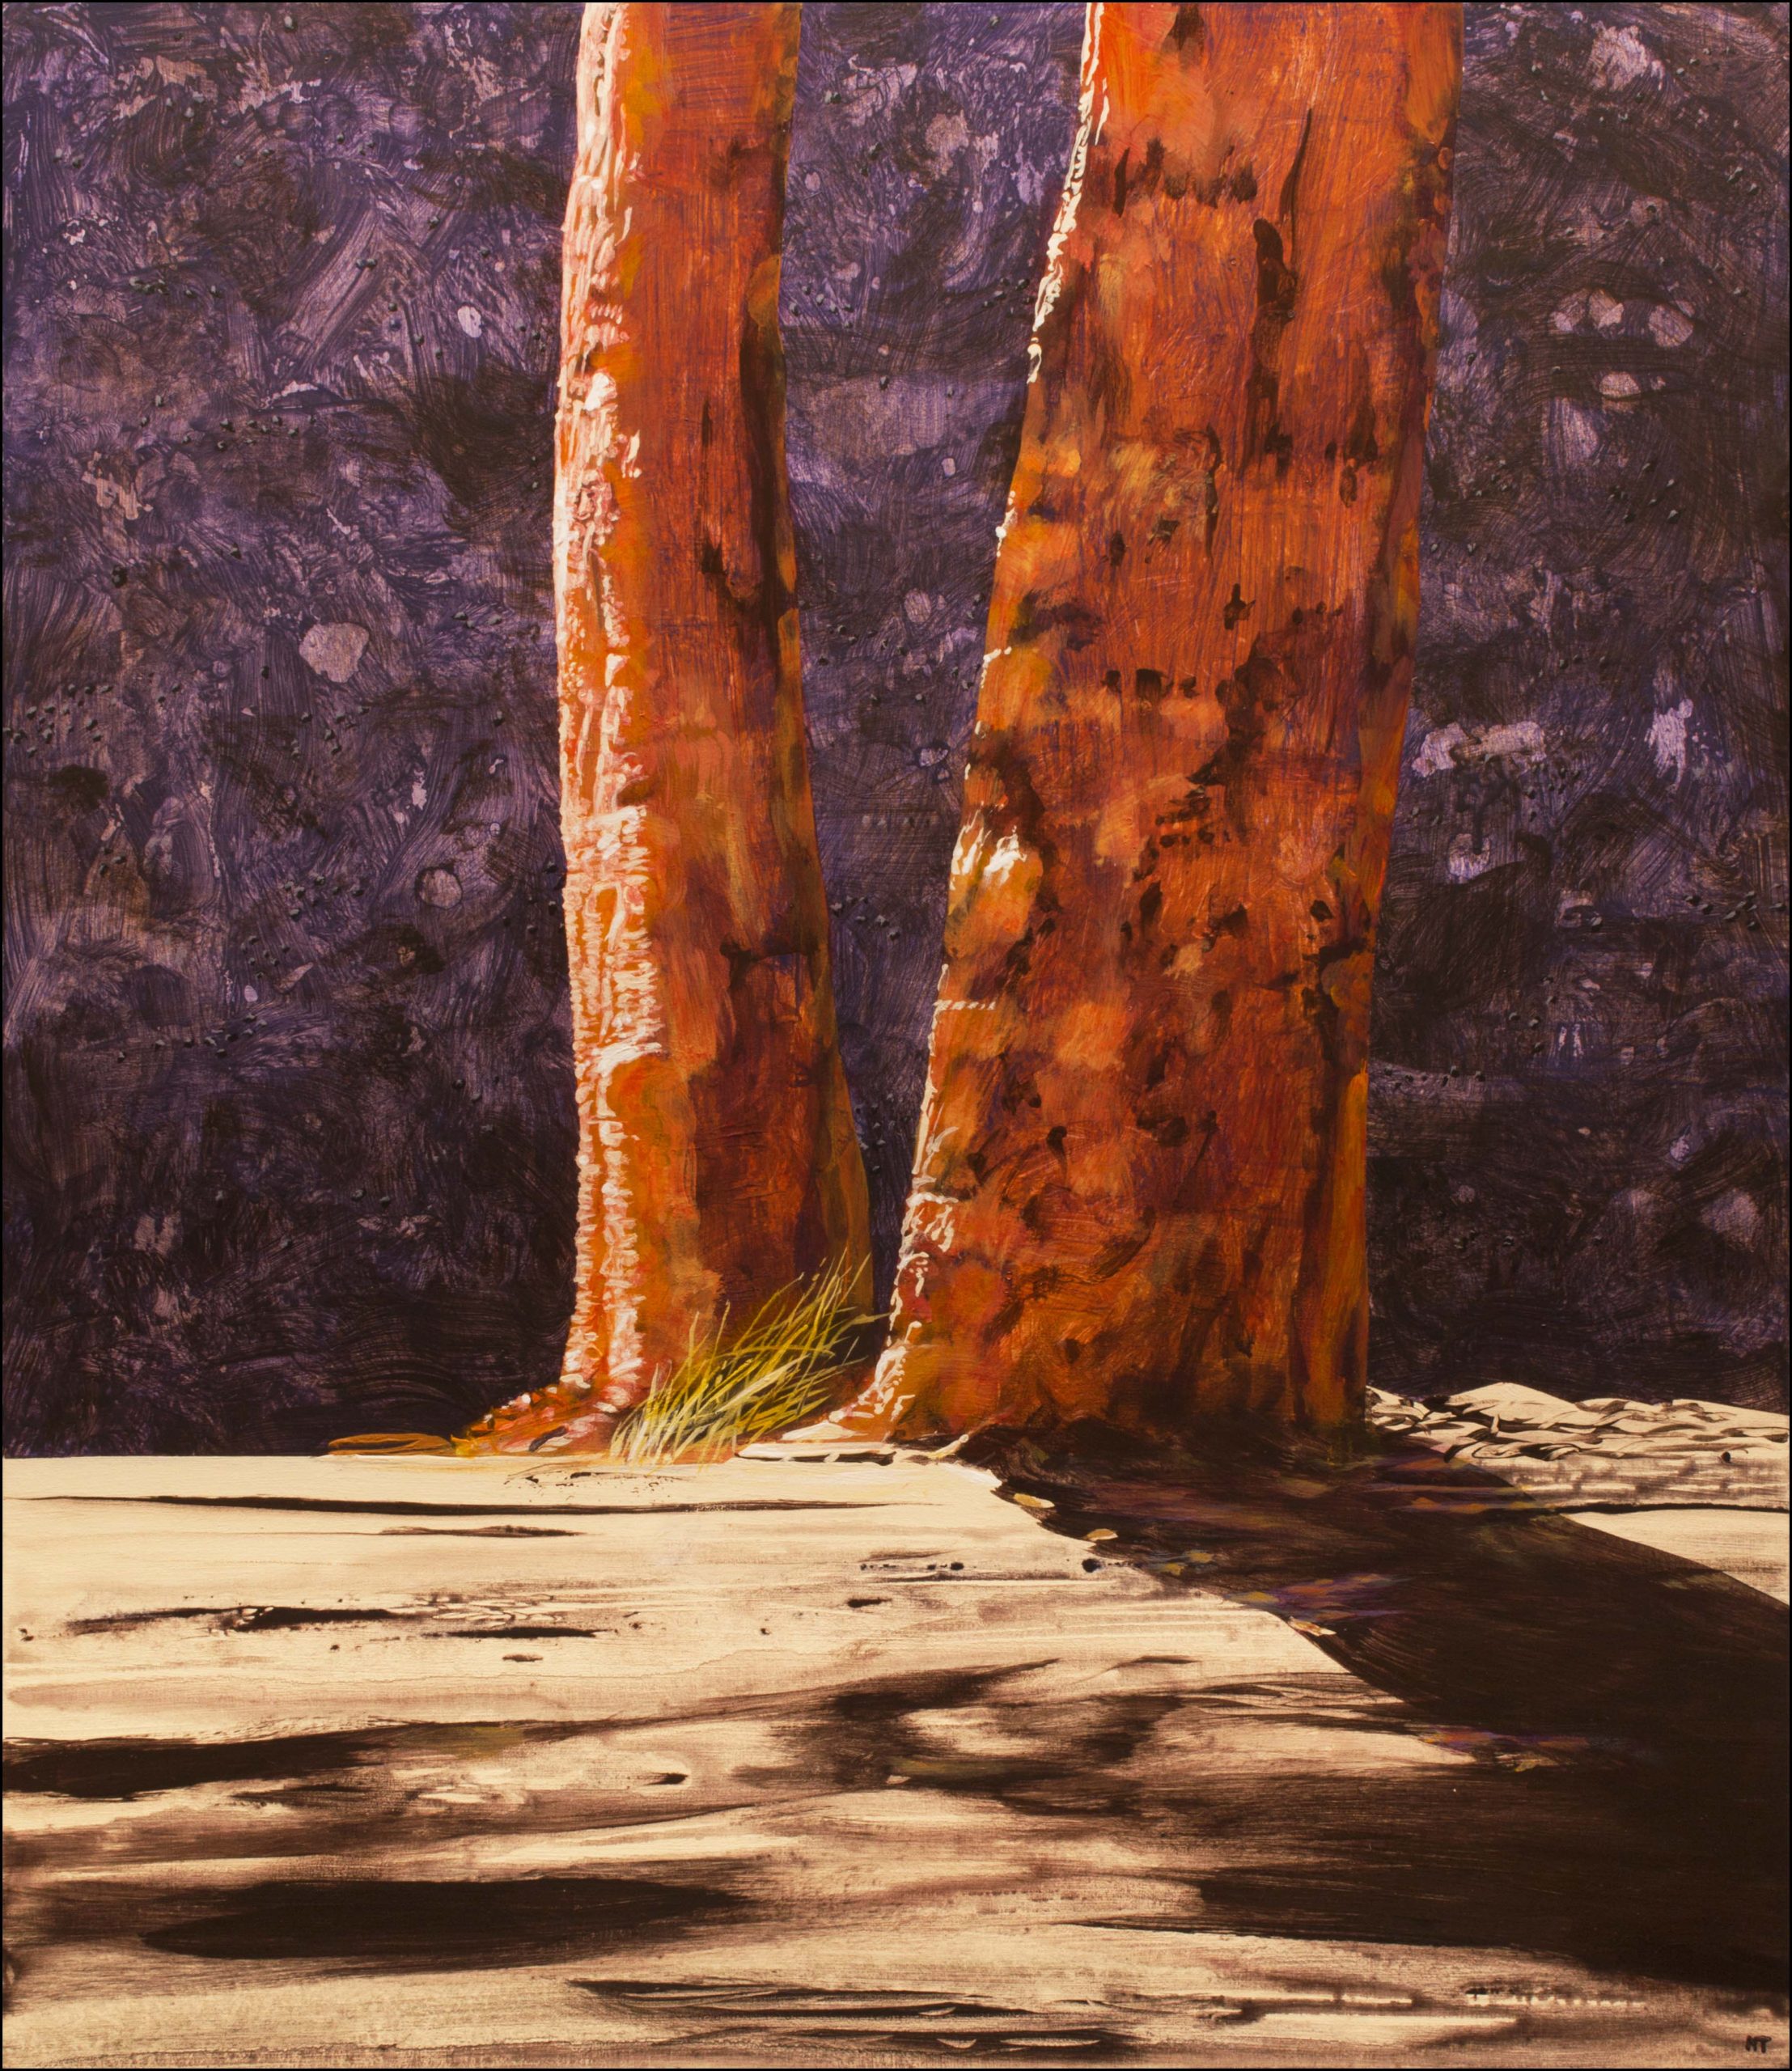 Neil Taylor 'Ganguddy' acrylic on canvas 76 x 66cm $5,200 SOLD